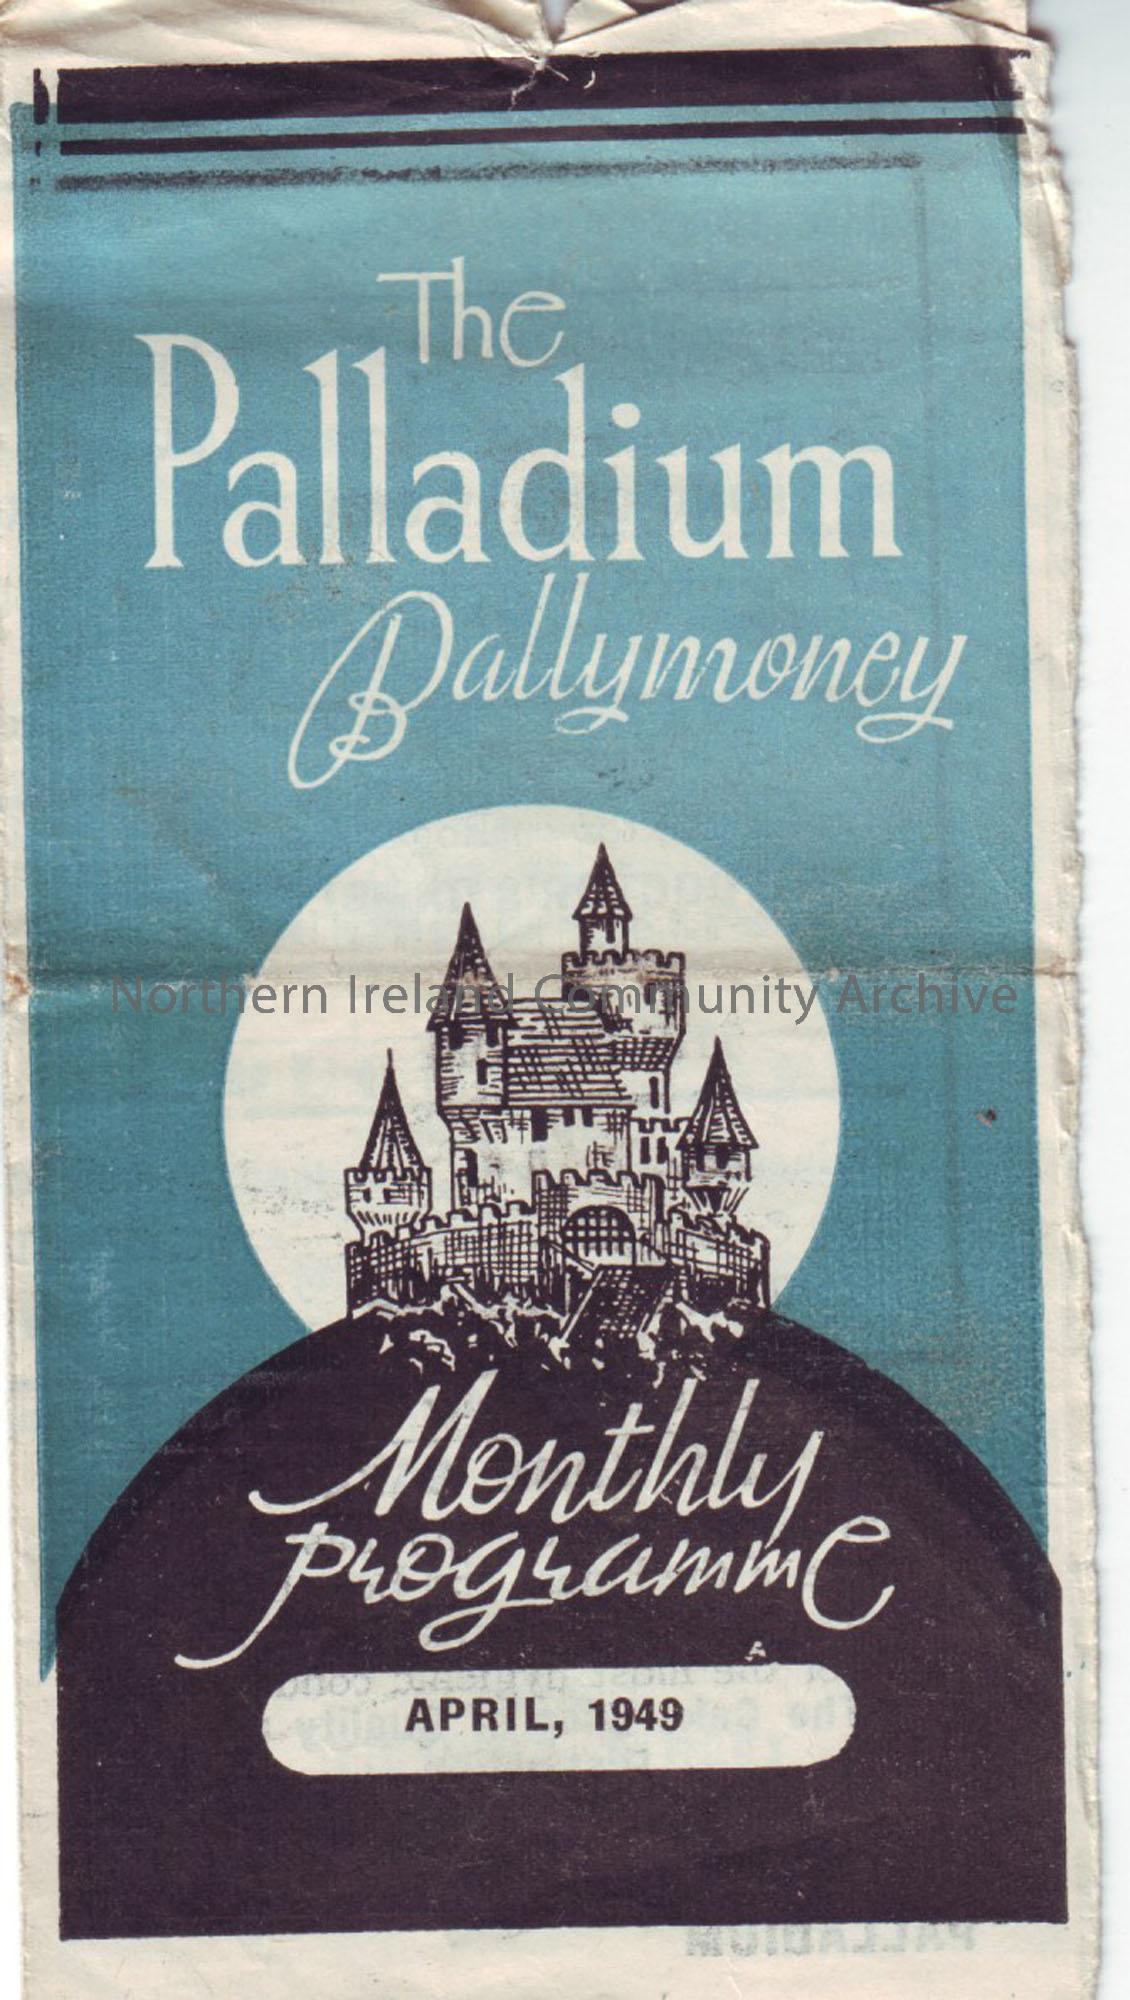 blue monthly programme for Ballymoney Palladium cinema- April 1949